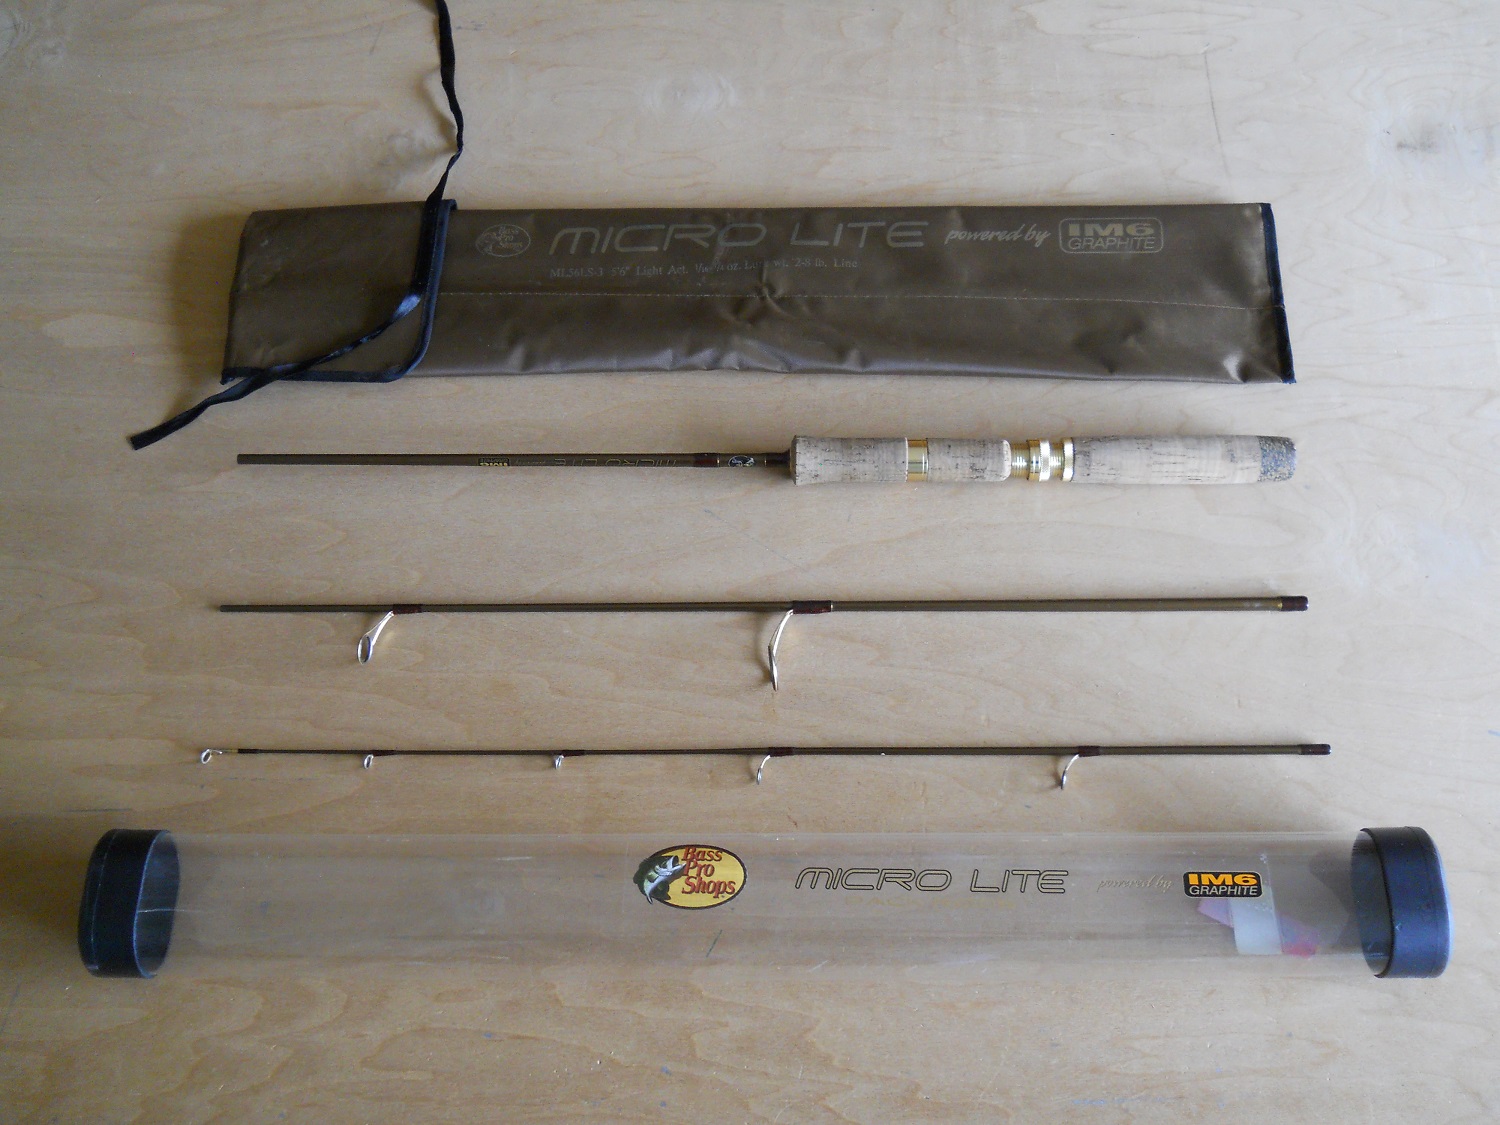 Basspro Micro-Lite Spinning Pack Rod. Graphite 5' 6 Light Action